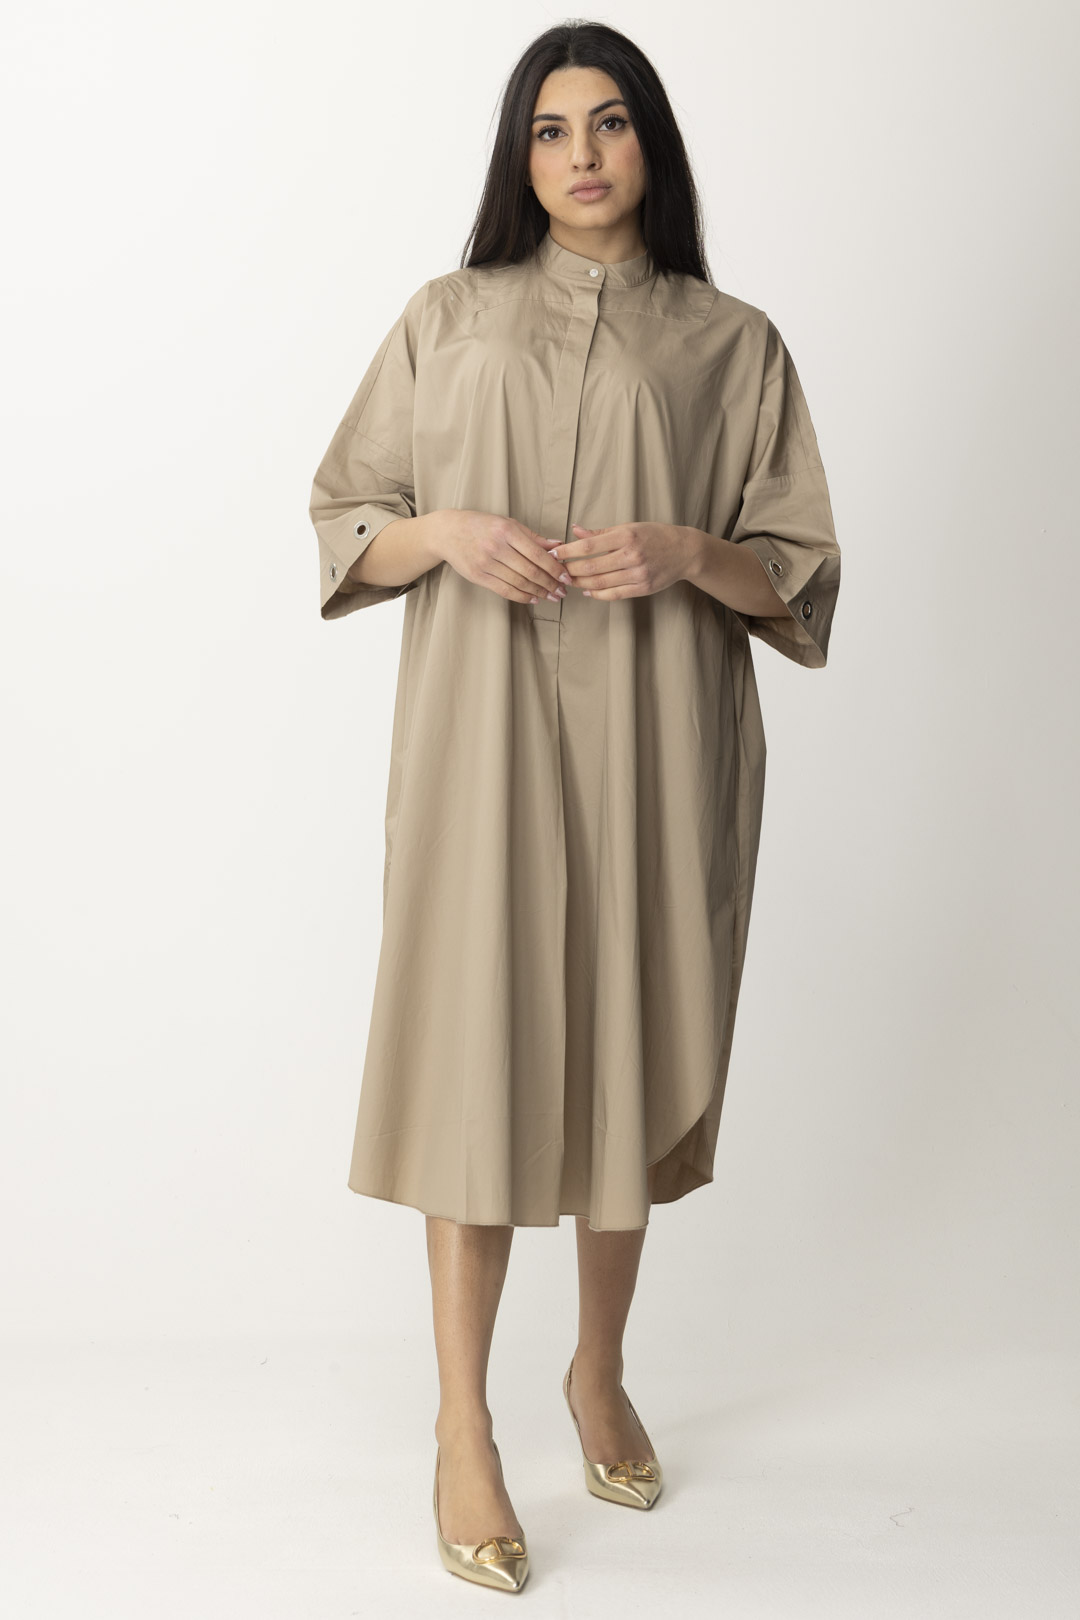 Aperçu: Replay Robe chemise oversize SAHARA